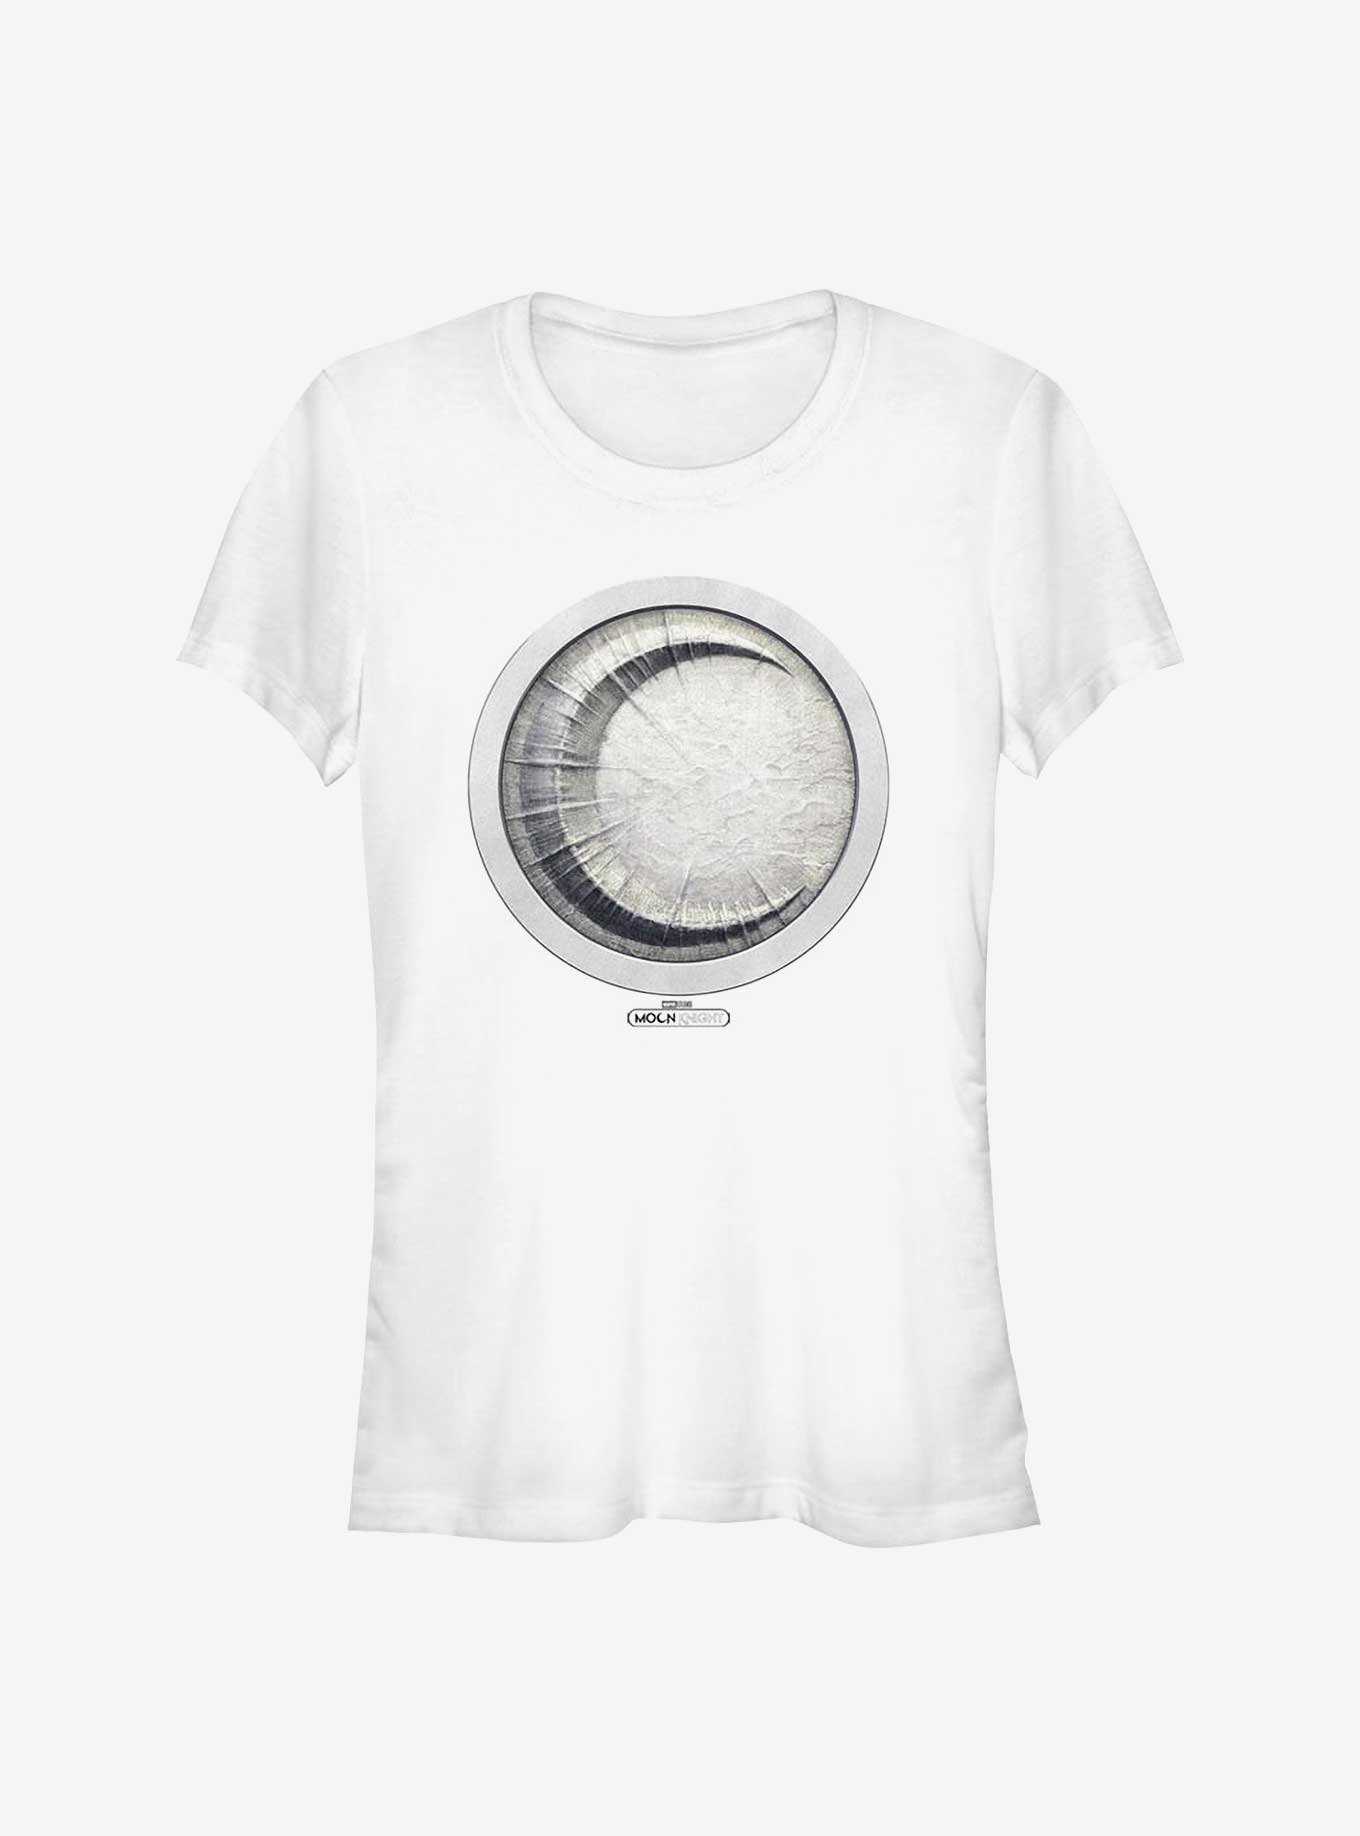 Marvel Moon Knight Moon Silver Icon Girls T-Shirt, , hi-res